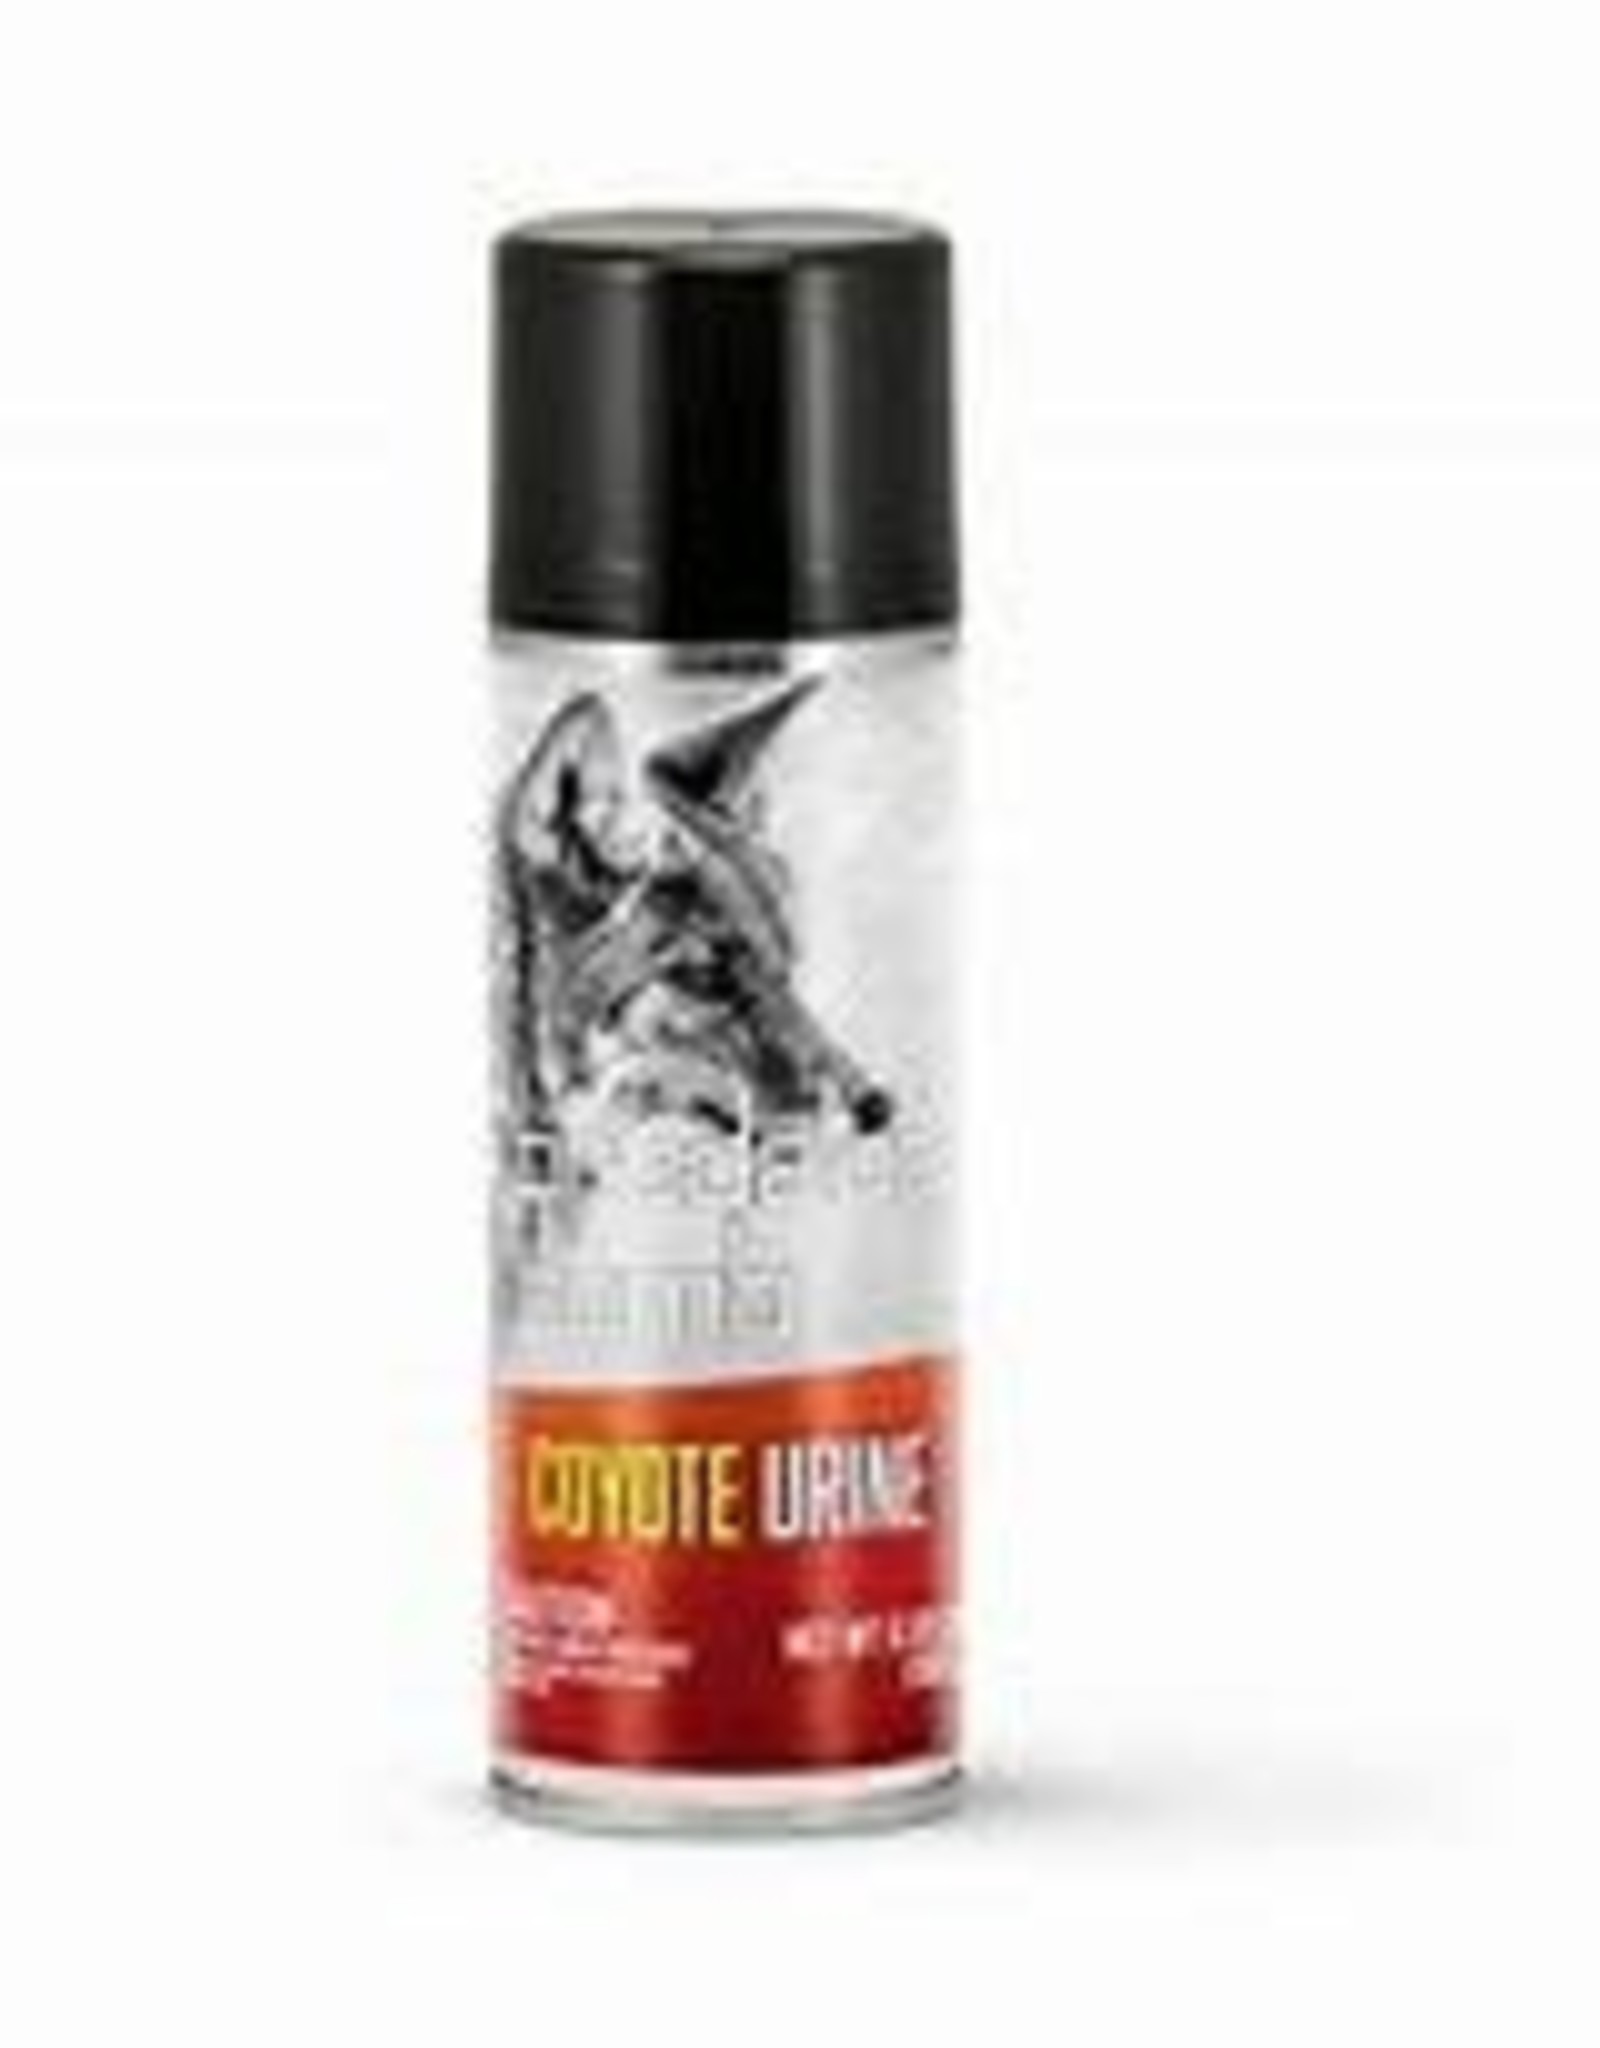 The Buck Bomb Coyote Urine